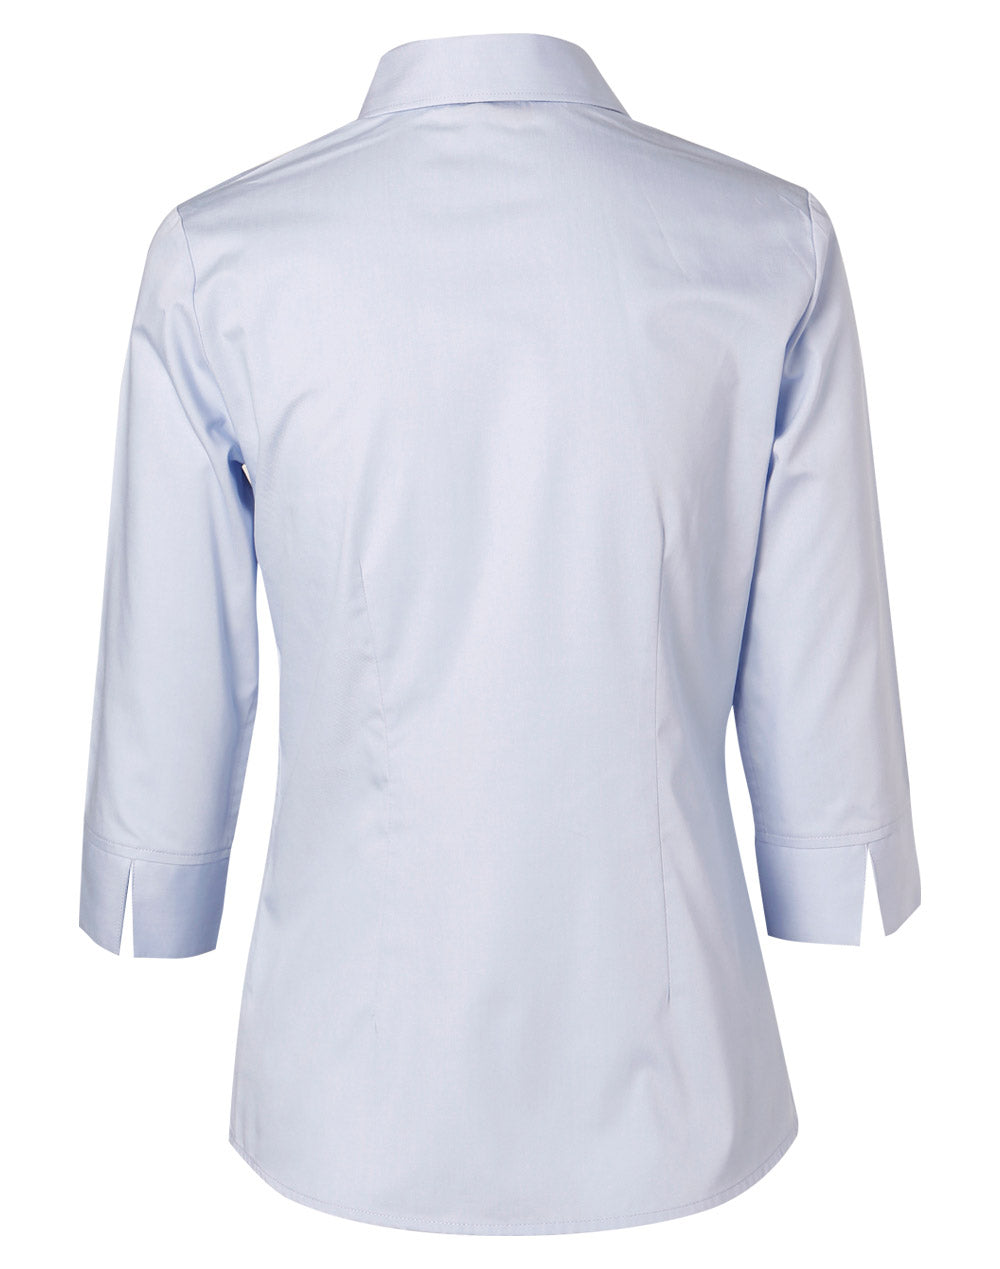 Winning Spirit Women's Fine Twill 3/4 Sleeve Shirt (M8030Q)